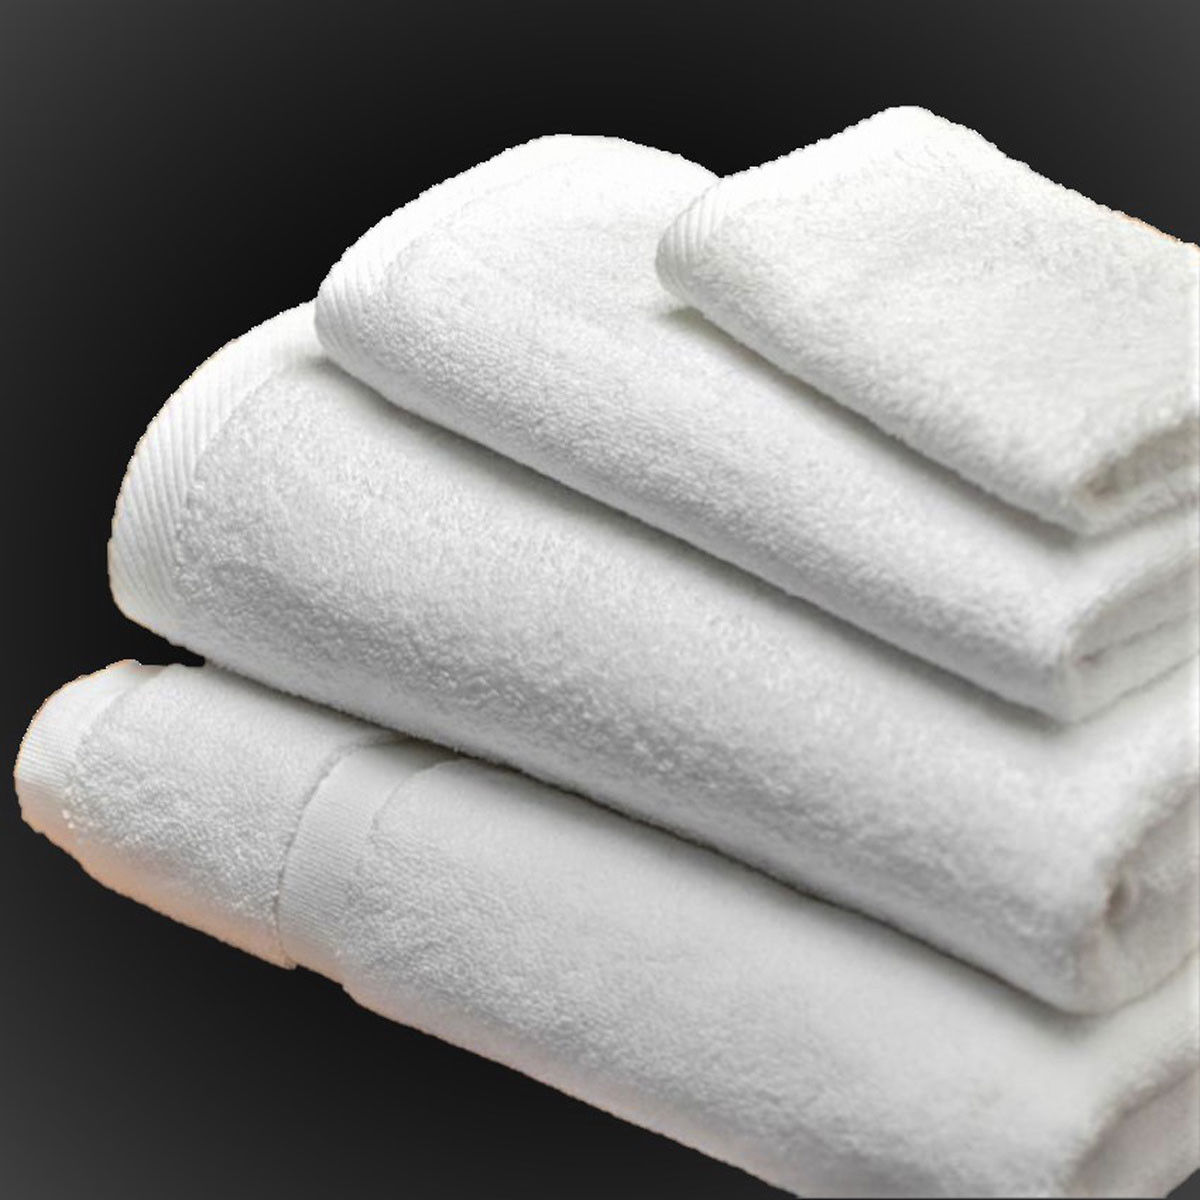 Wholesale Bath Towels 100% Cotton - In Bulk Cases Questions & Answers